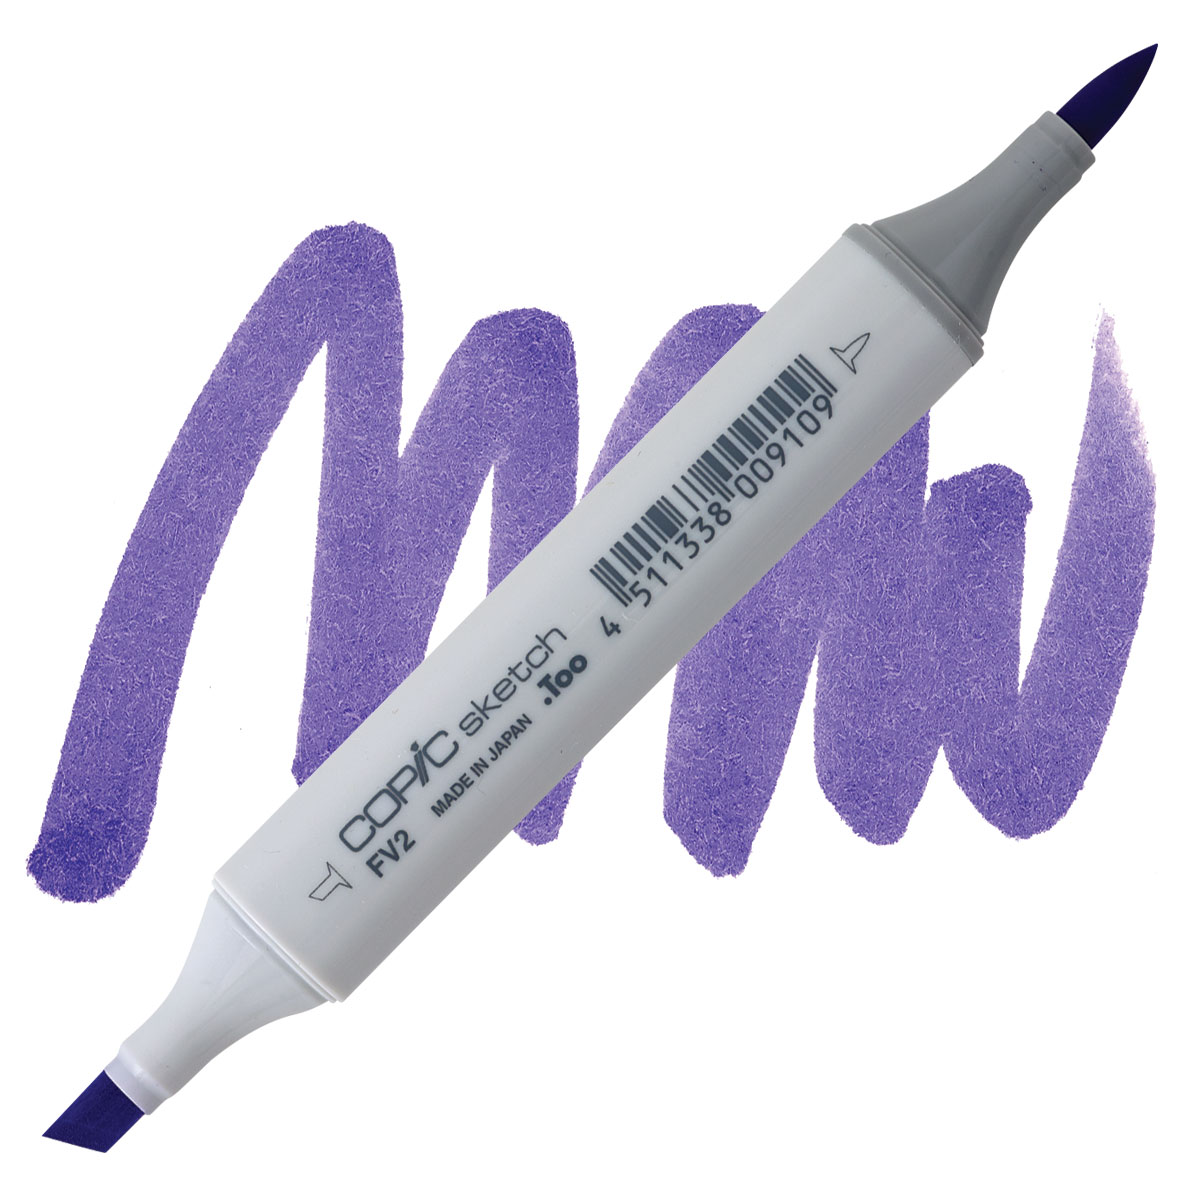 YR00 - Copic Sketch Marker Powder Pink — Violeta Ink